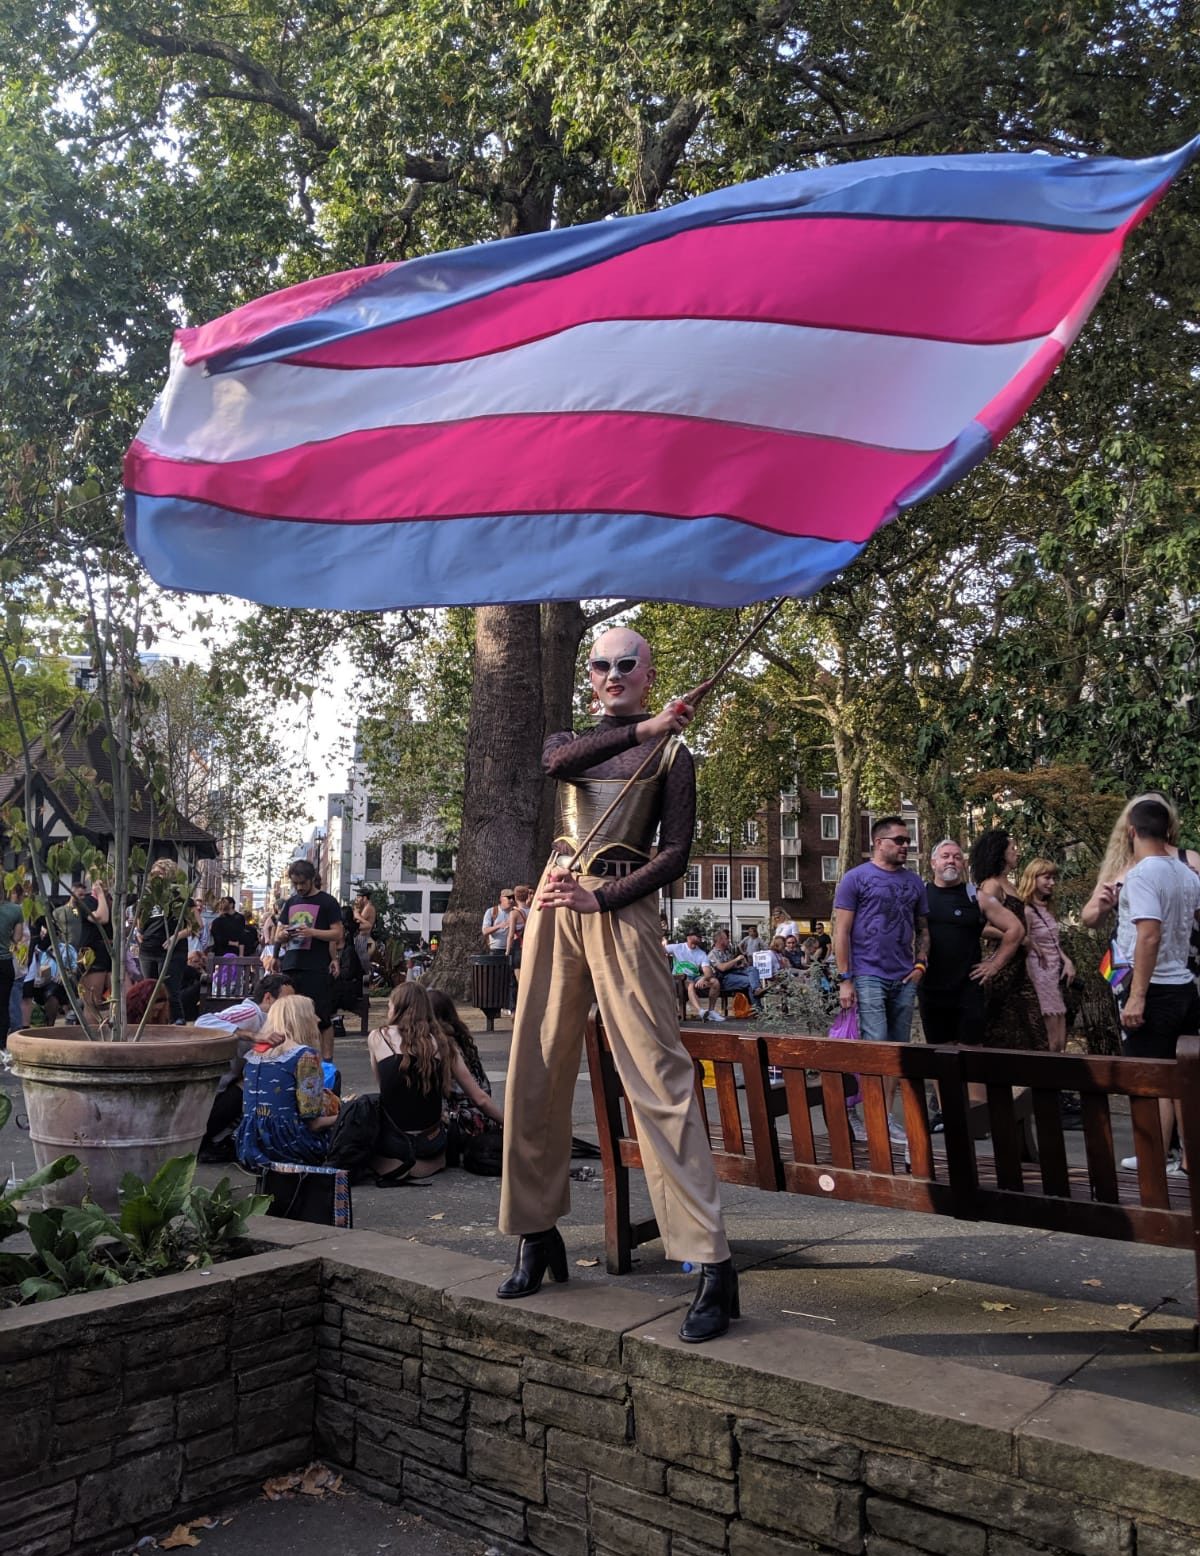 Jamie Windust flying the trans flag